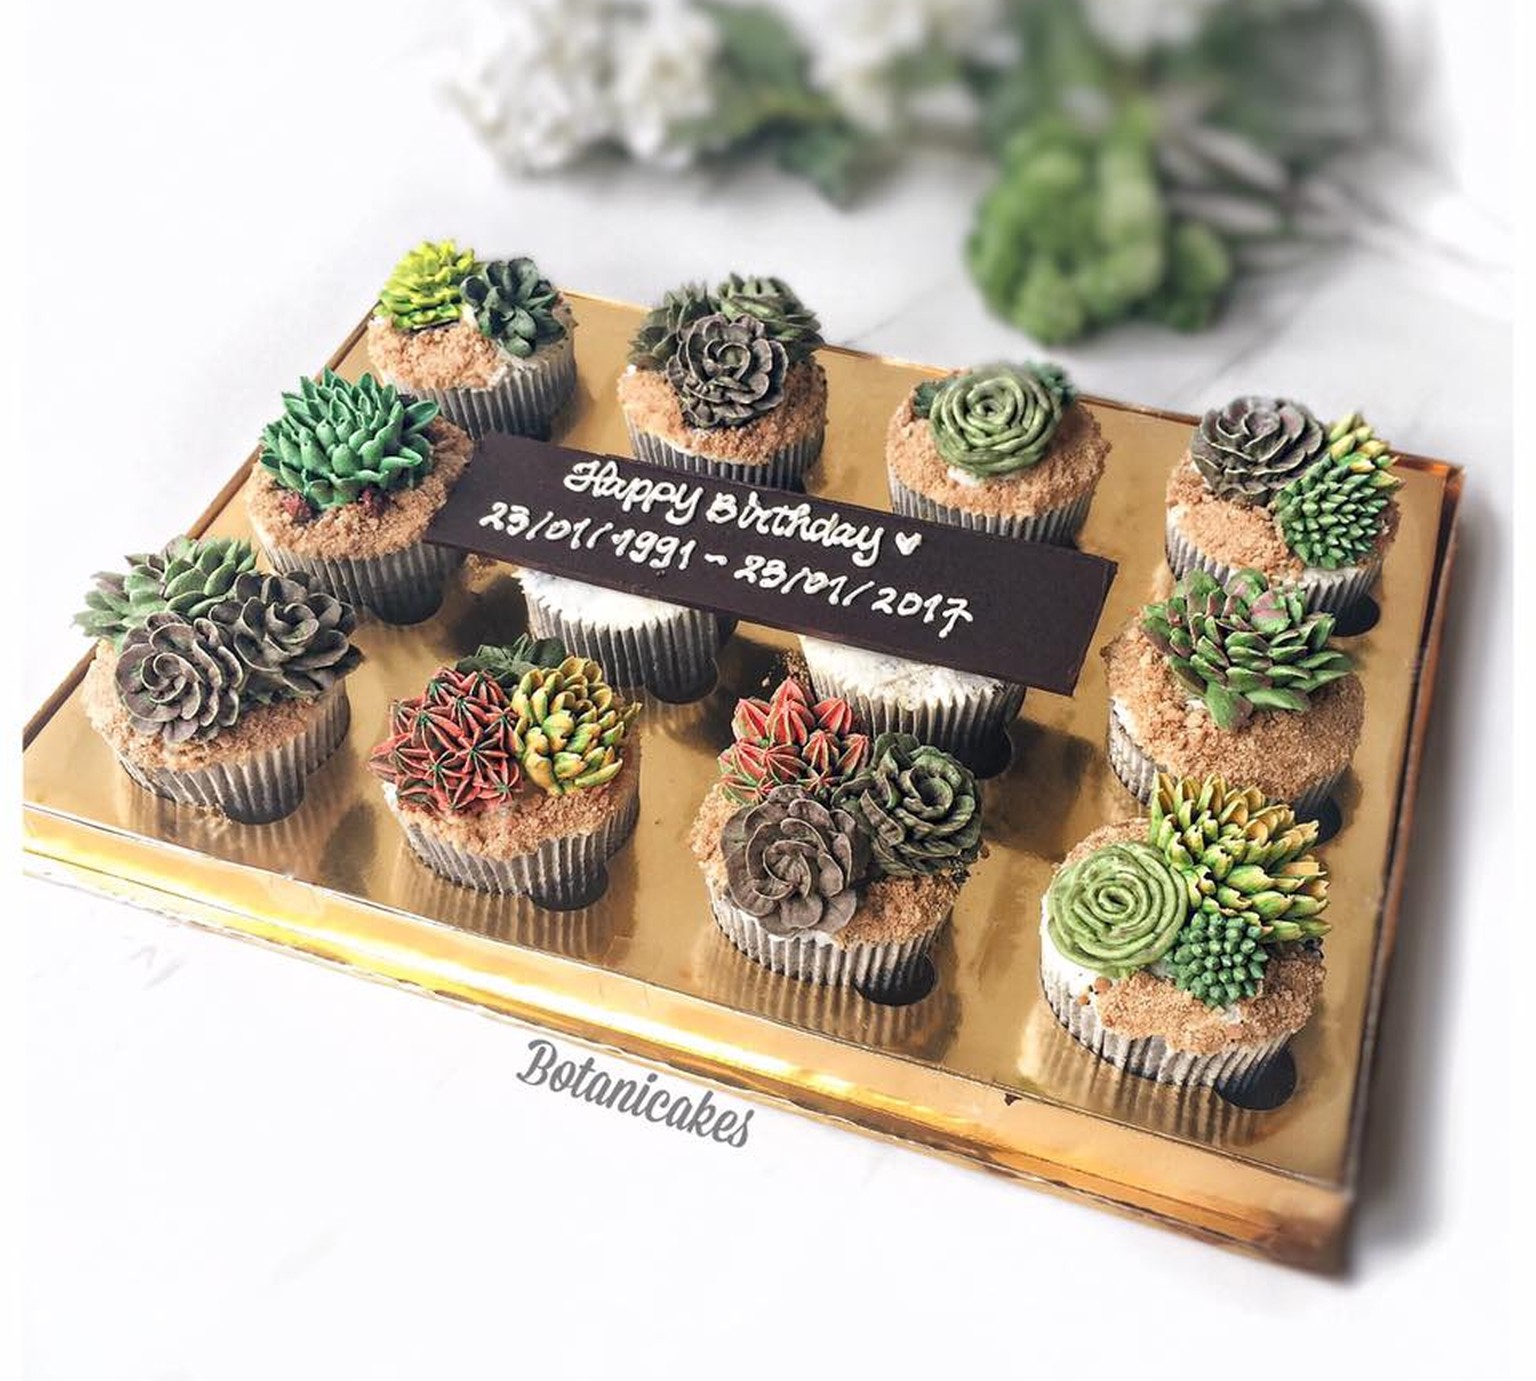 Kaktus Pflanzen Cupcakes
https://www.instagram.com/botanicakes/